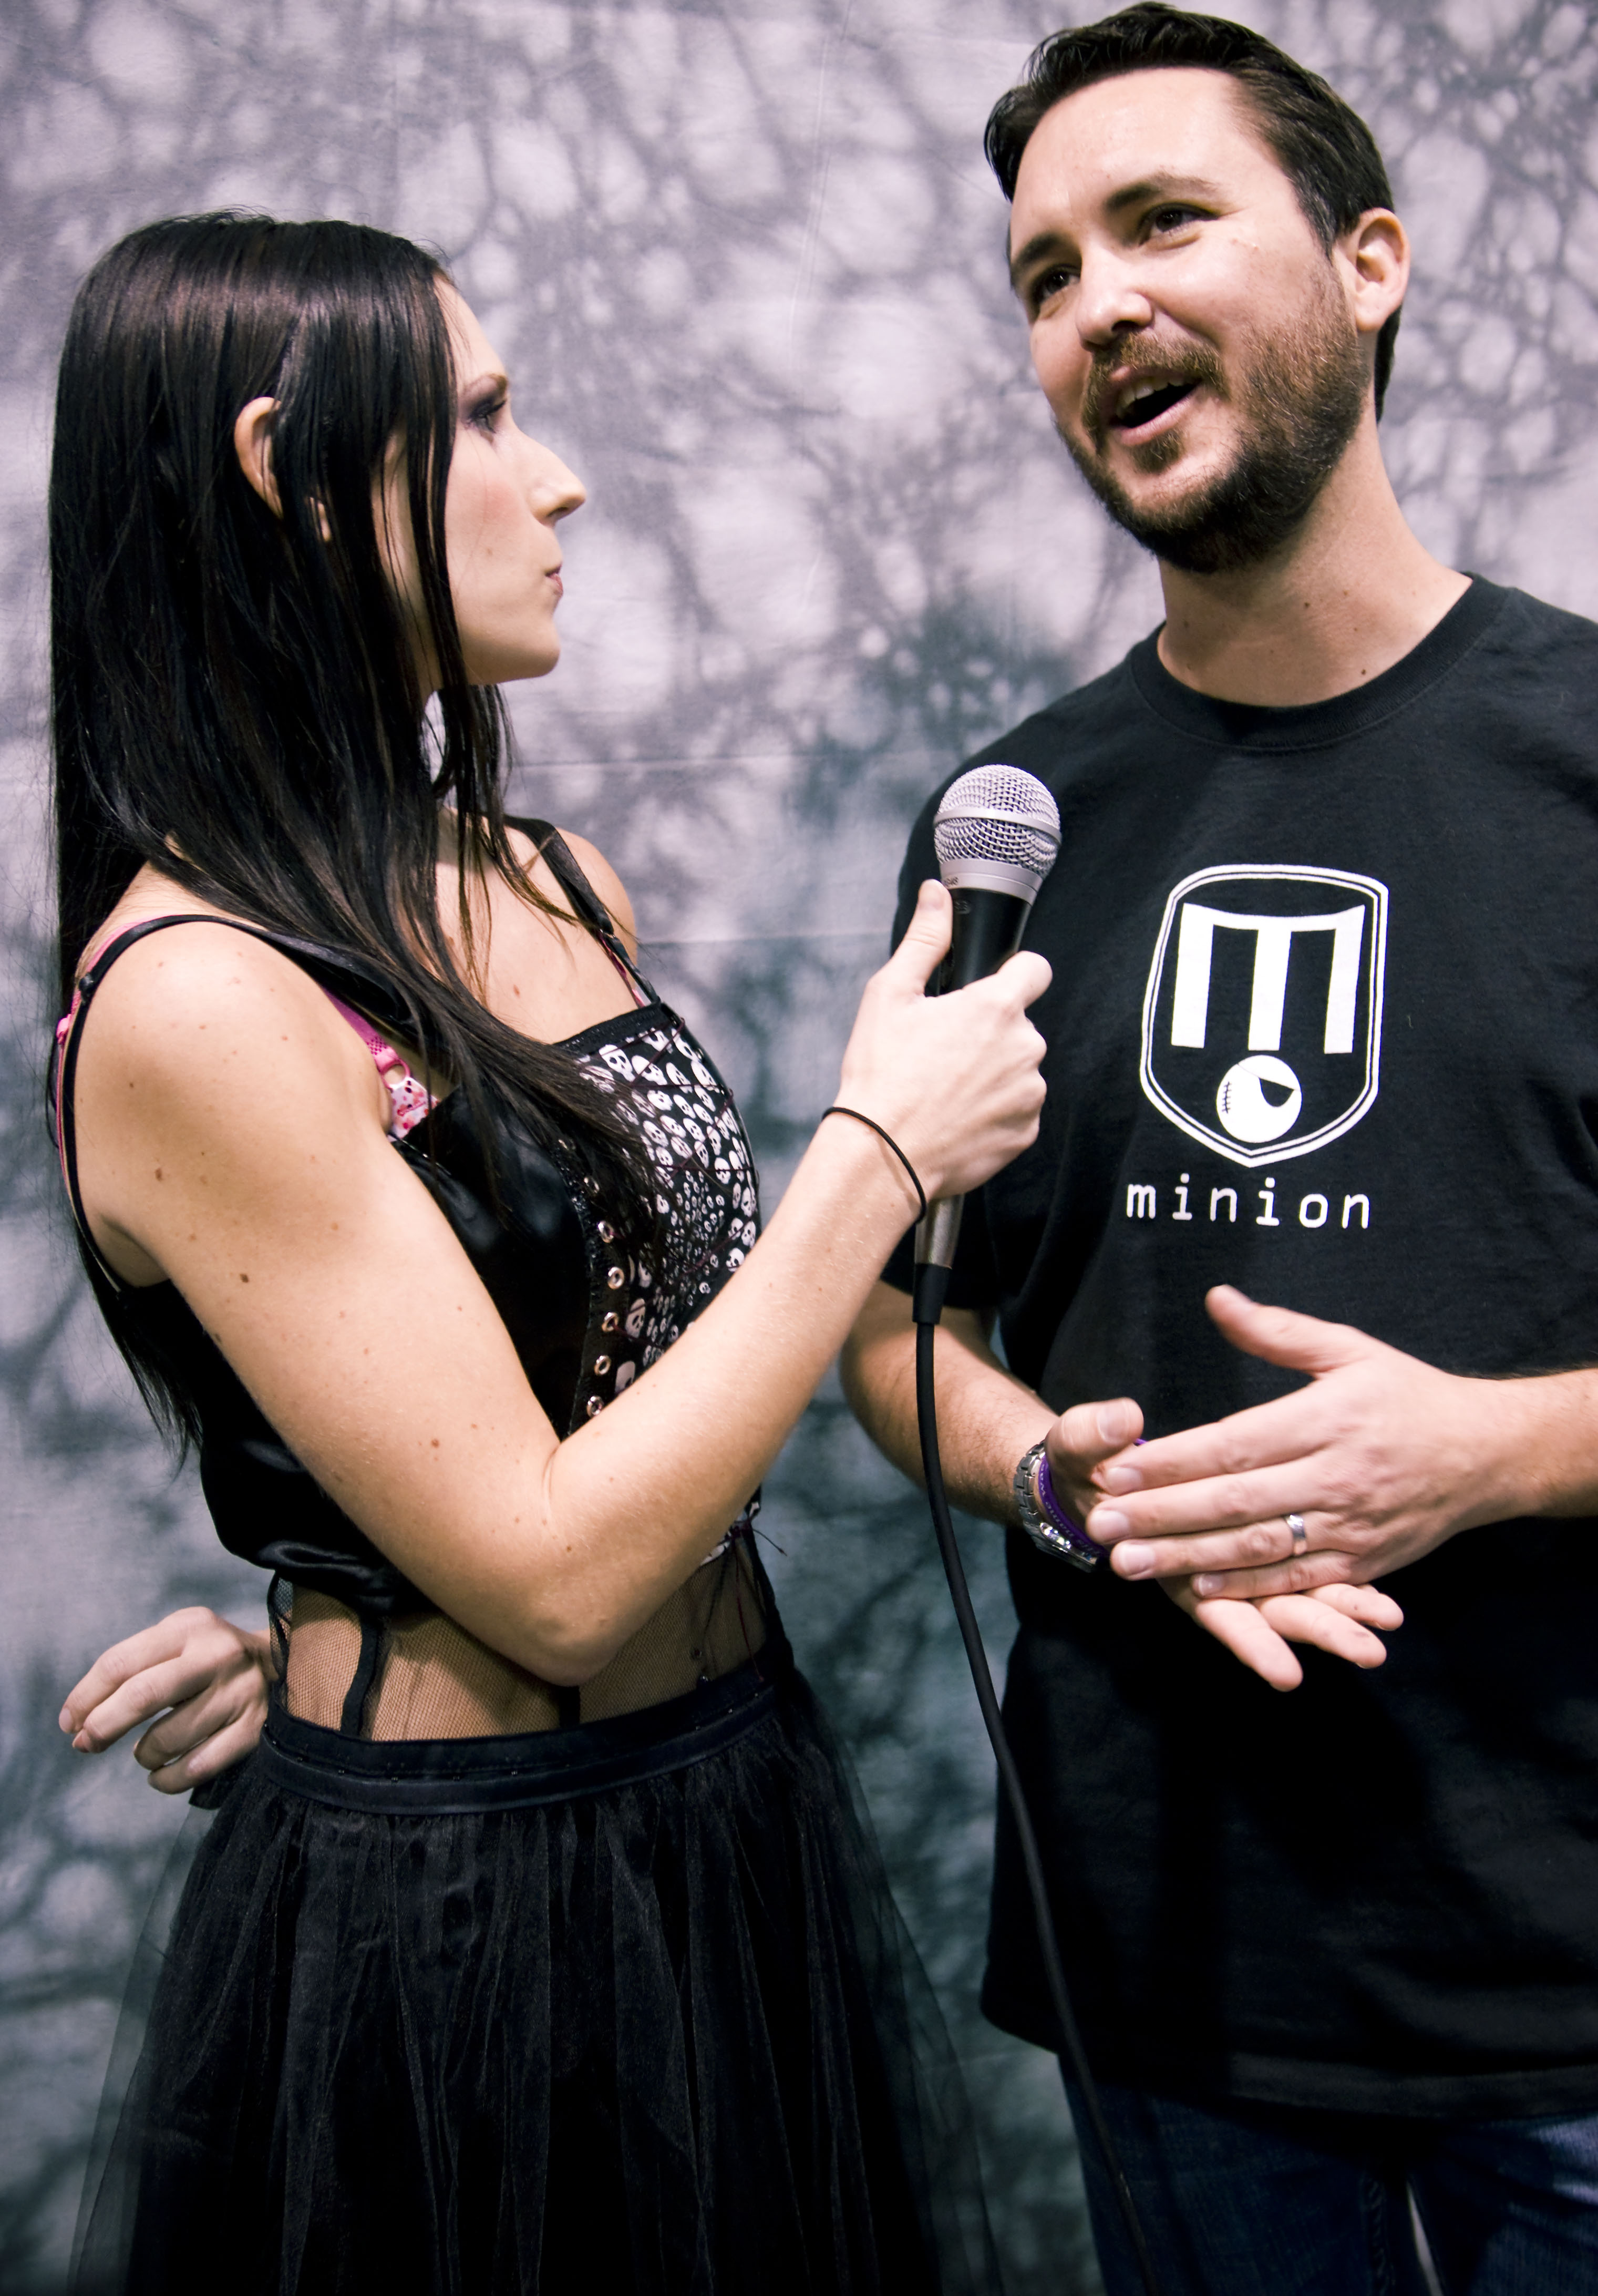 Victoria Paege interviewing Wil Wheaton at the 2010 Phoenix Comicon.